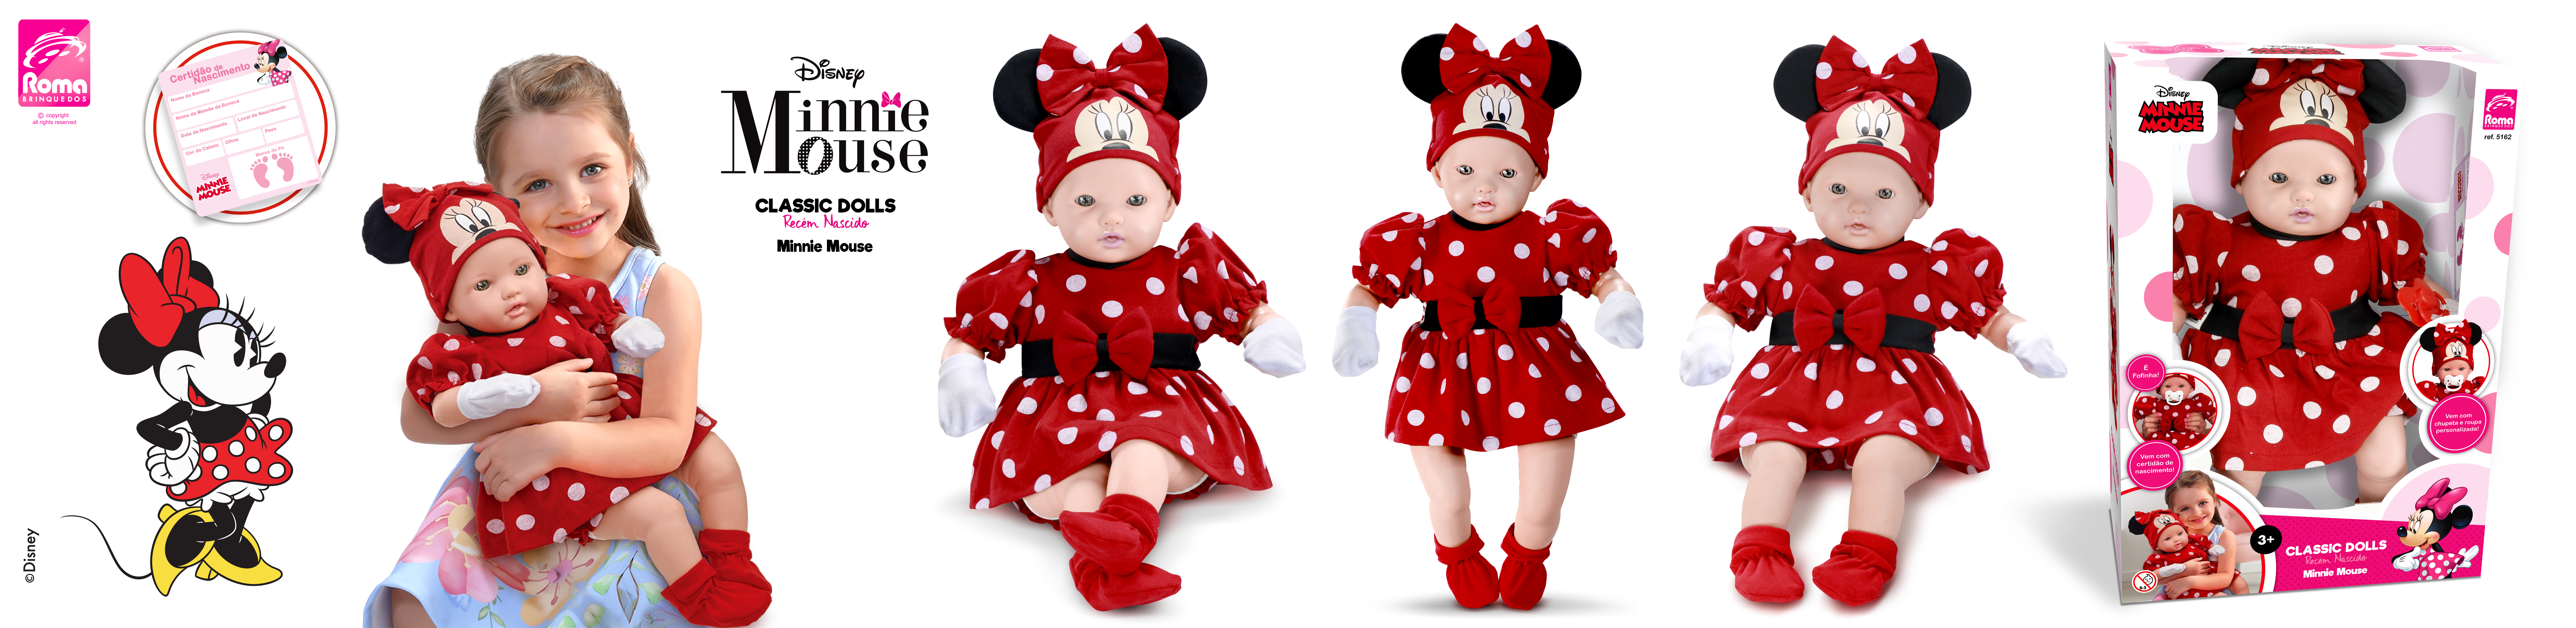 5162 - Classic Dolls - Recém Nascido - Minnie Mouse.png